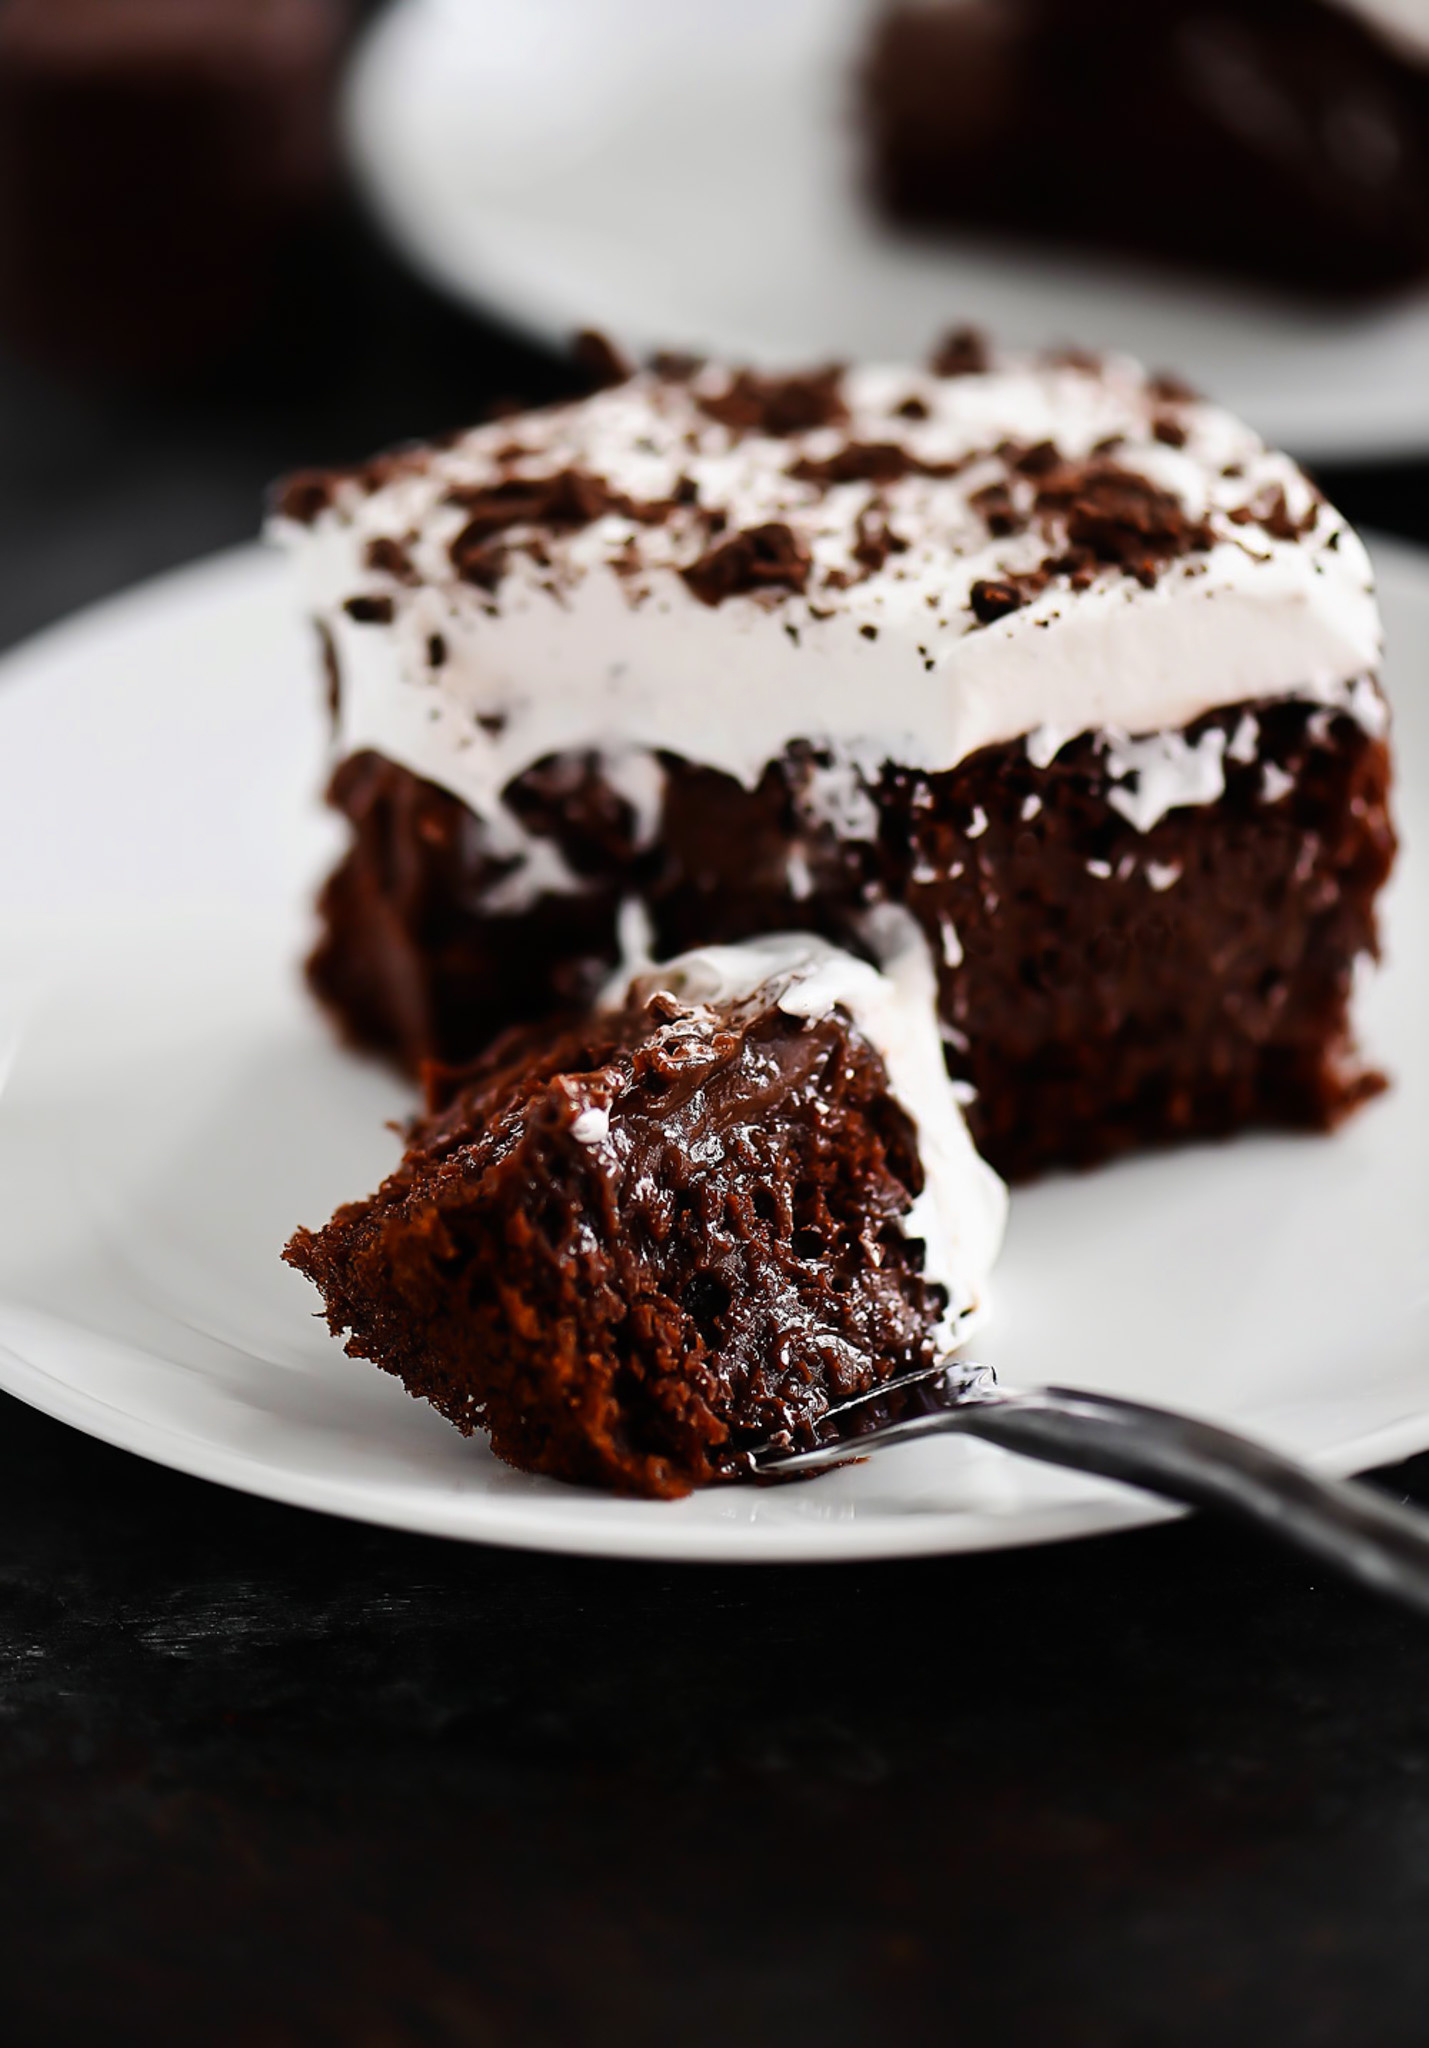 Chocolate Poke Cake with mint cookies